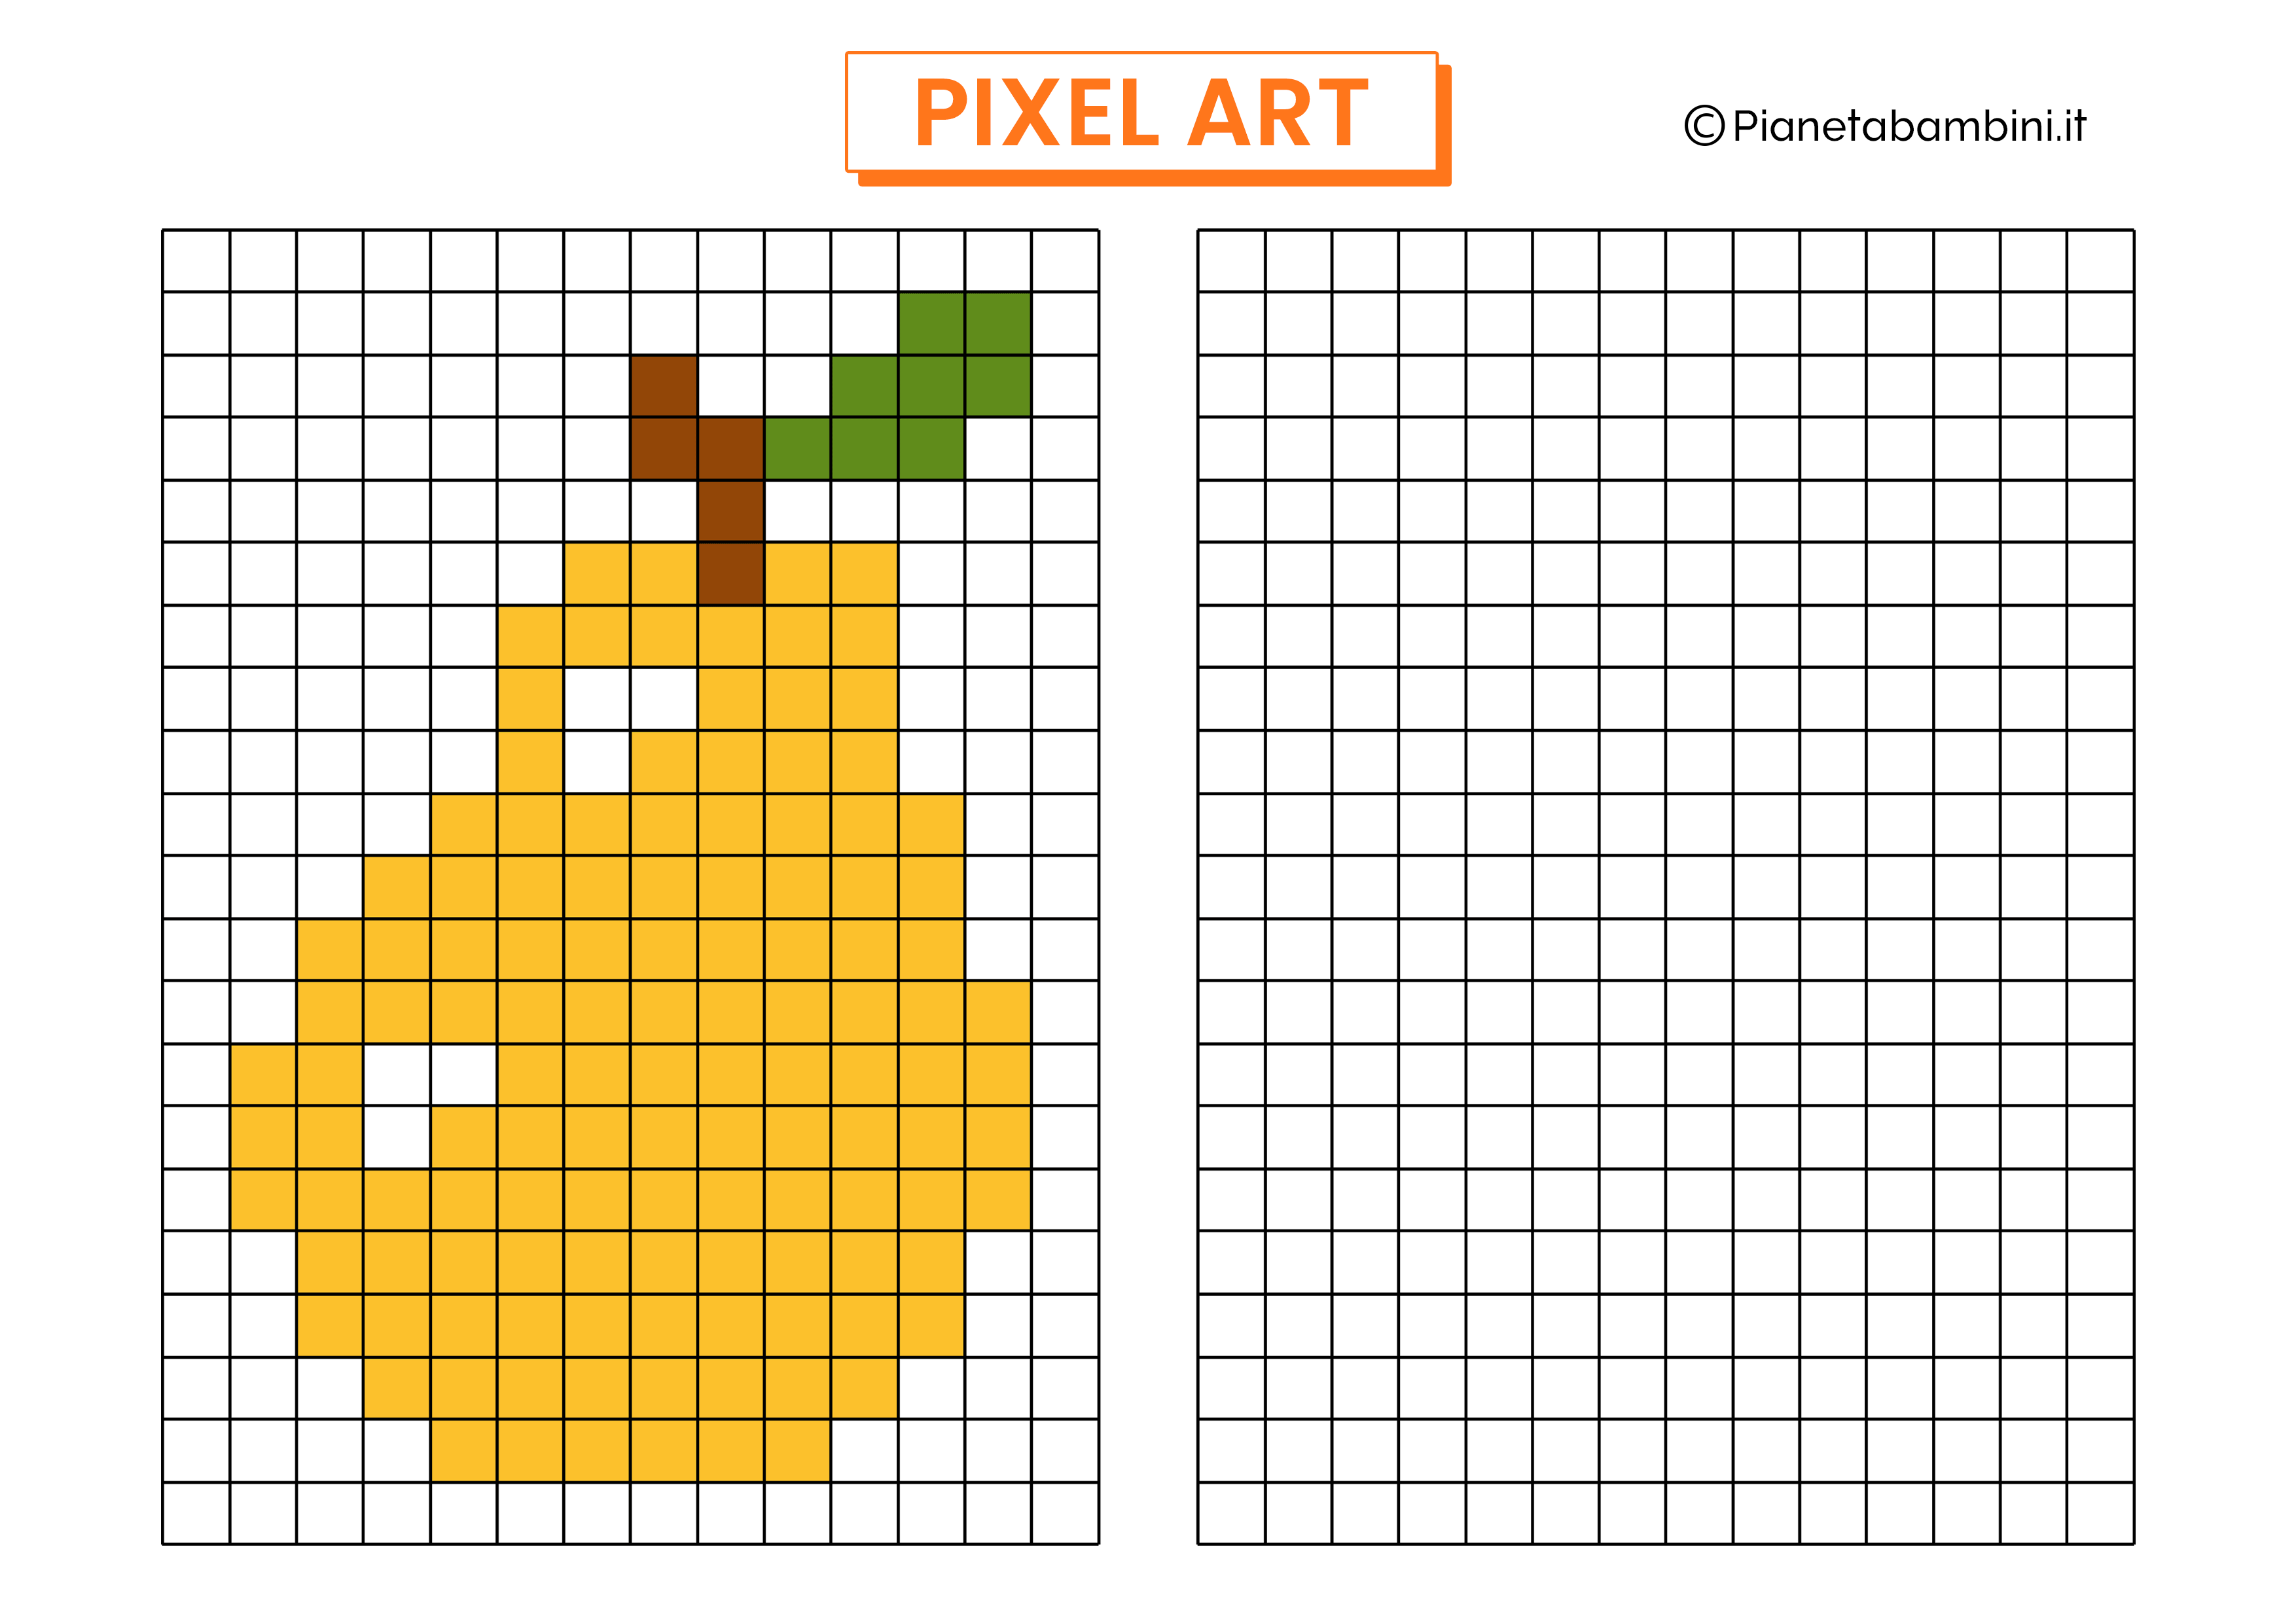 Pixel Art pera da copiare